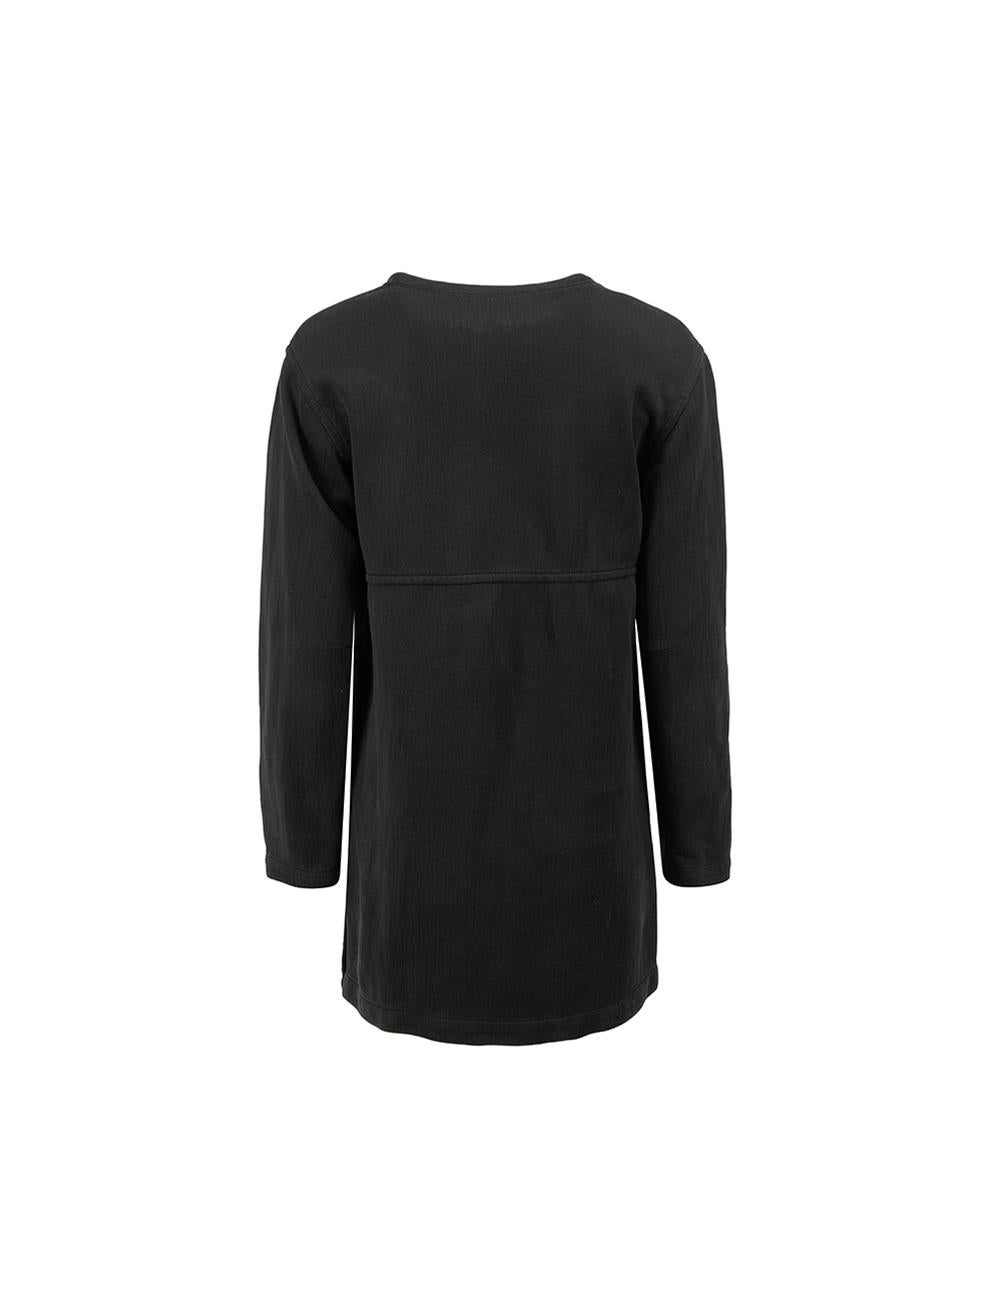 Proenza Schouler Black Cotton Silk Button Detail Sweatshirt Size S In Good Condition In London, GB